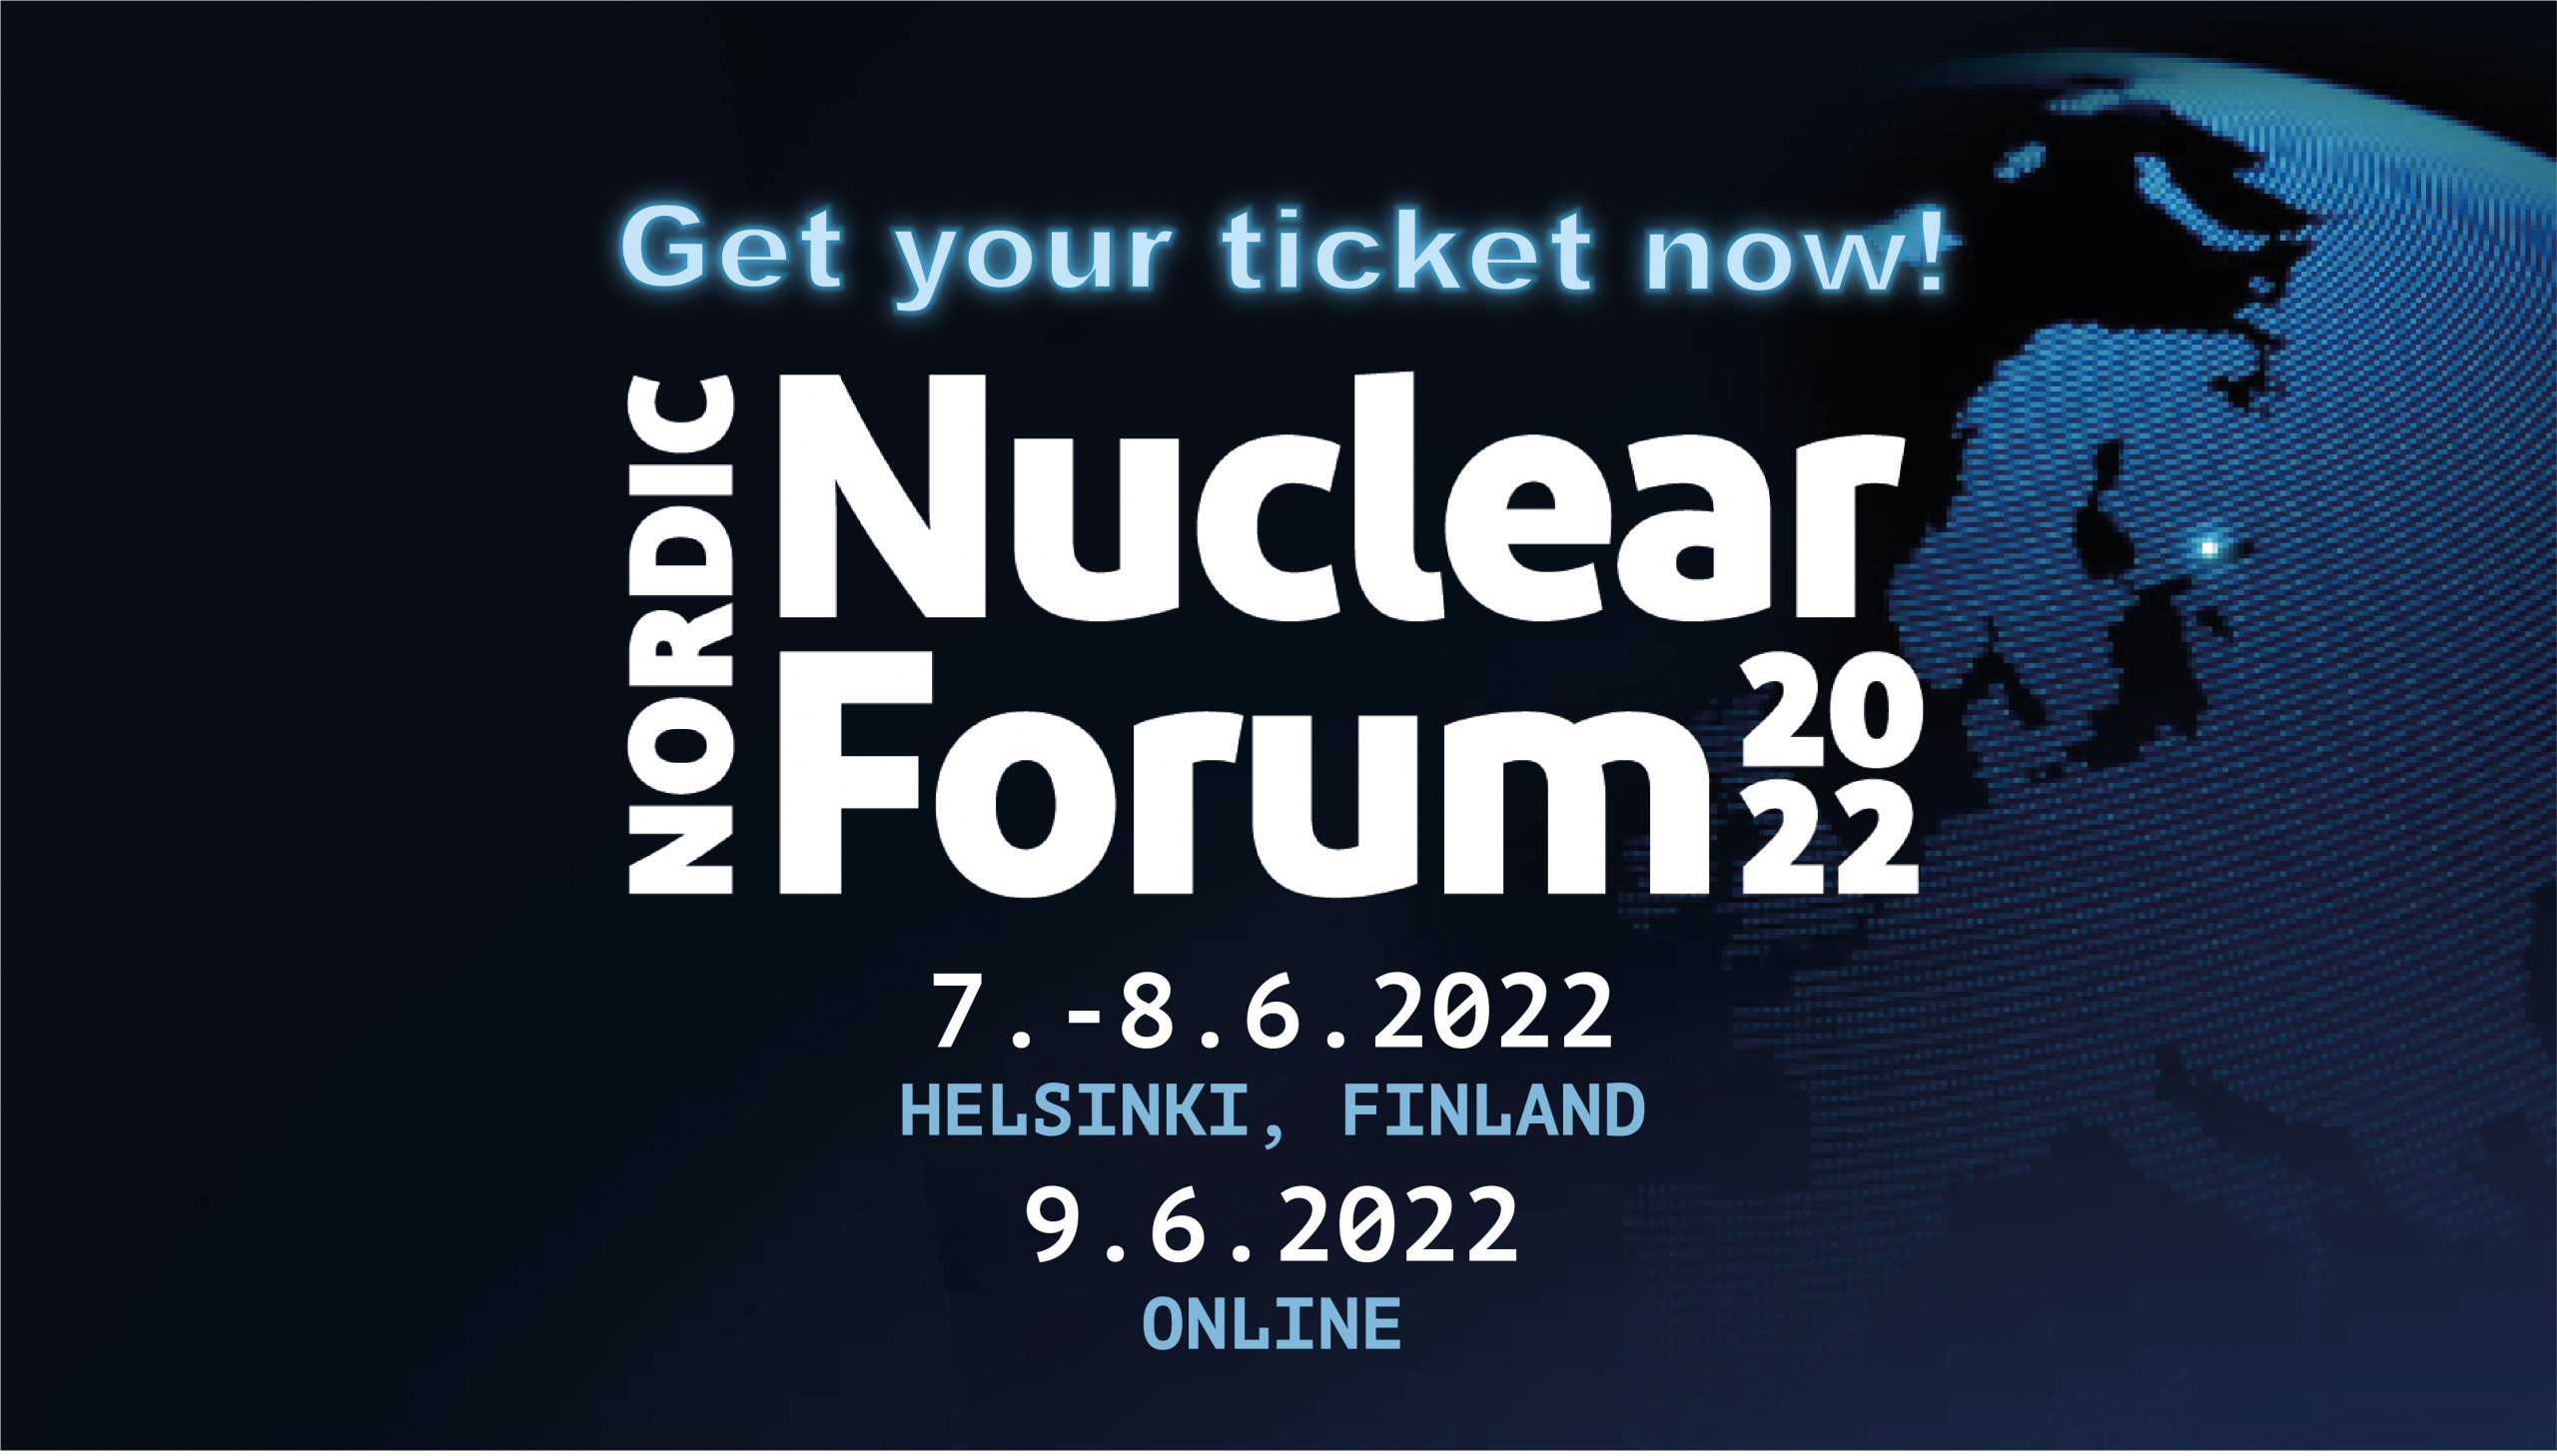 Nordic Nuclear Forum 2022 Speakers